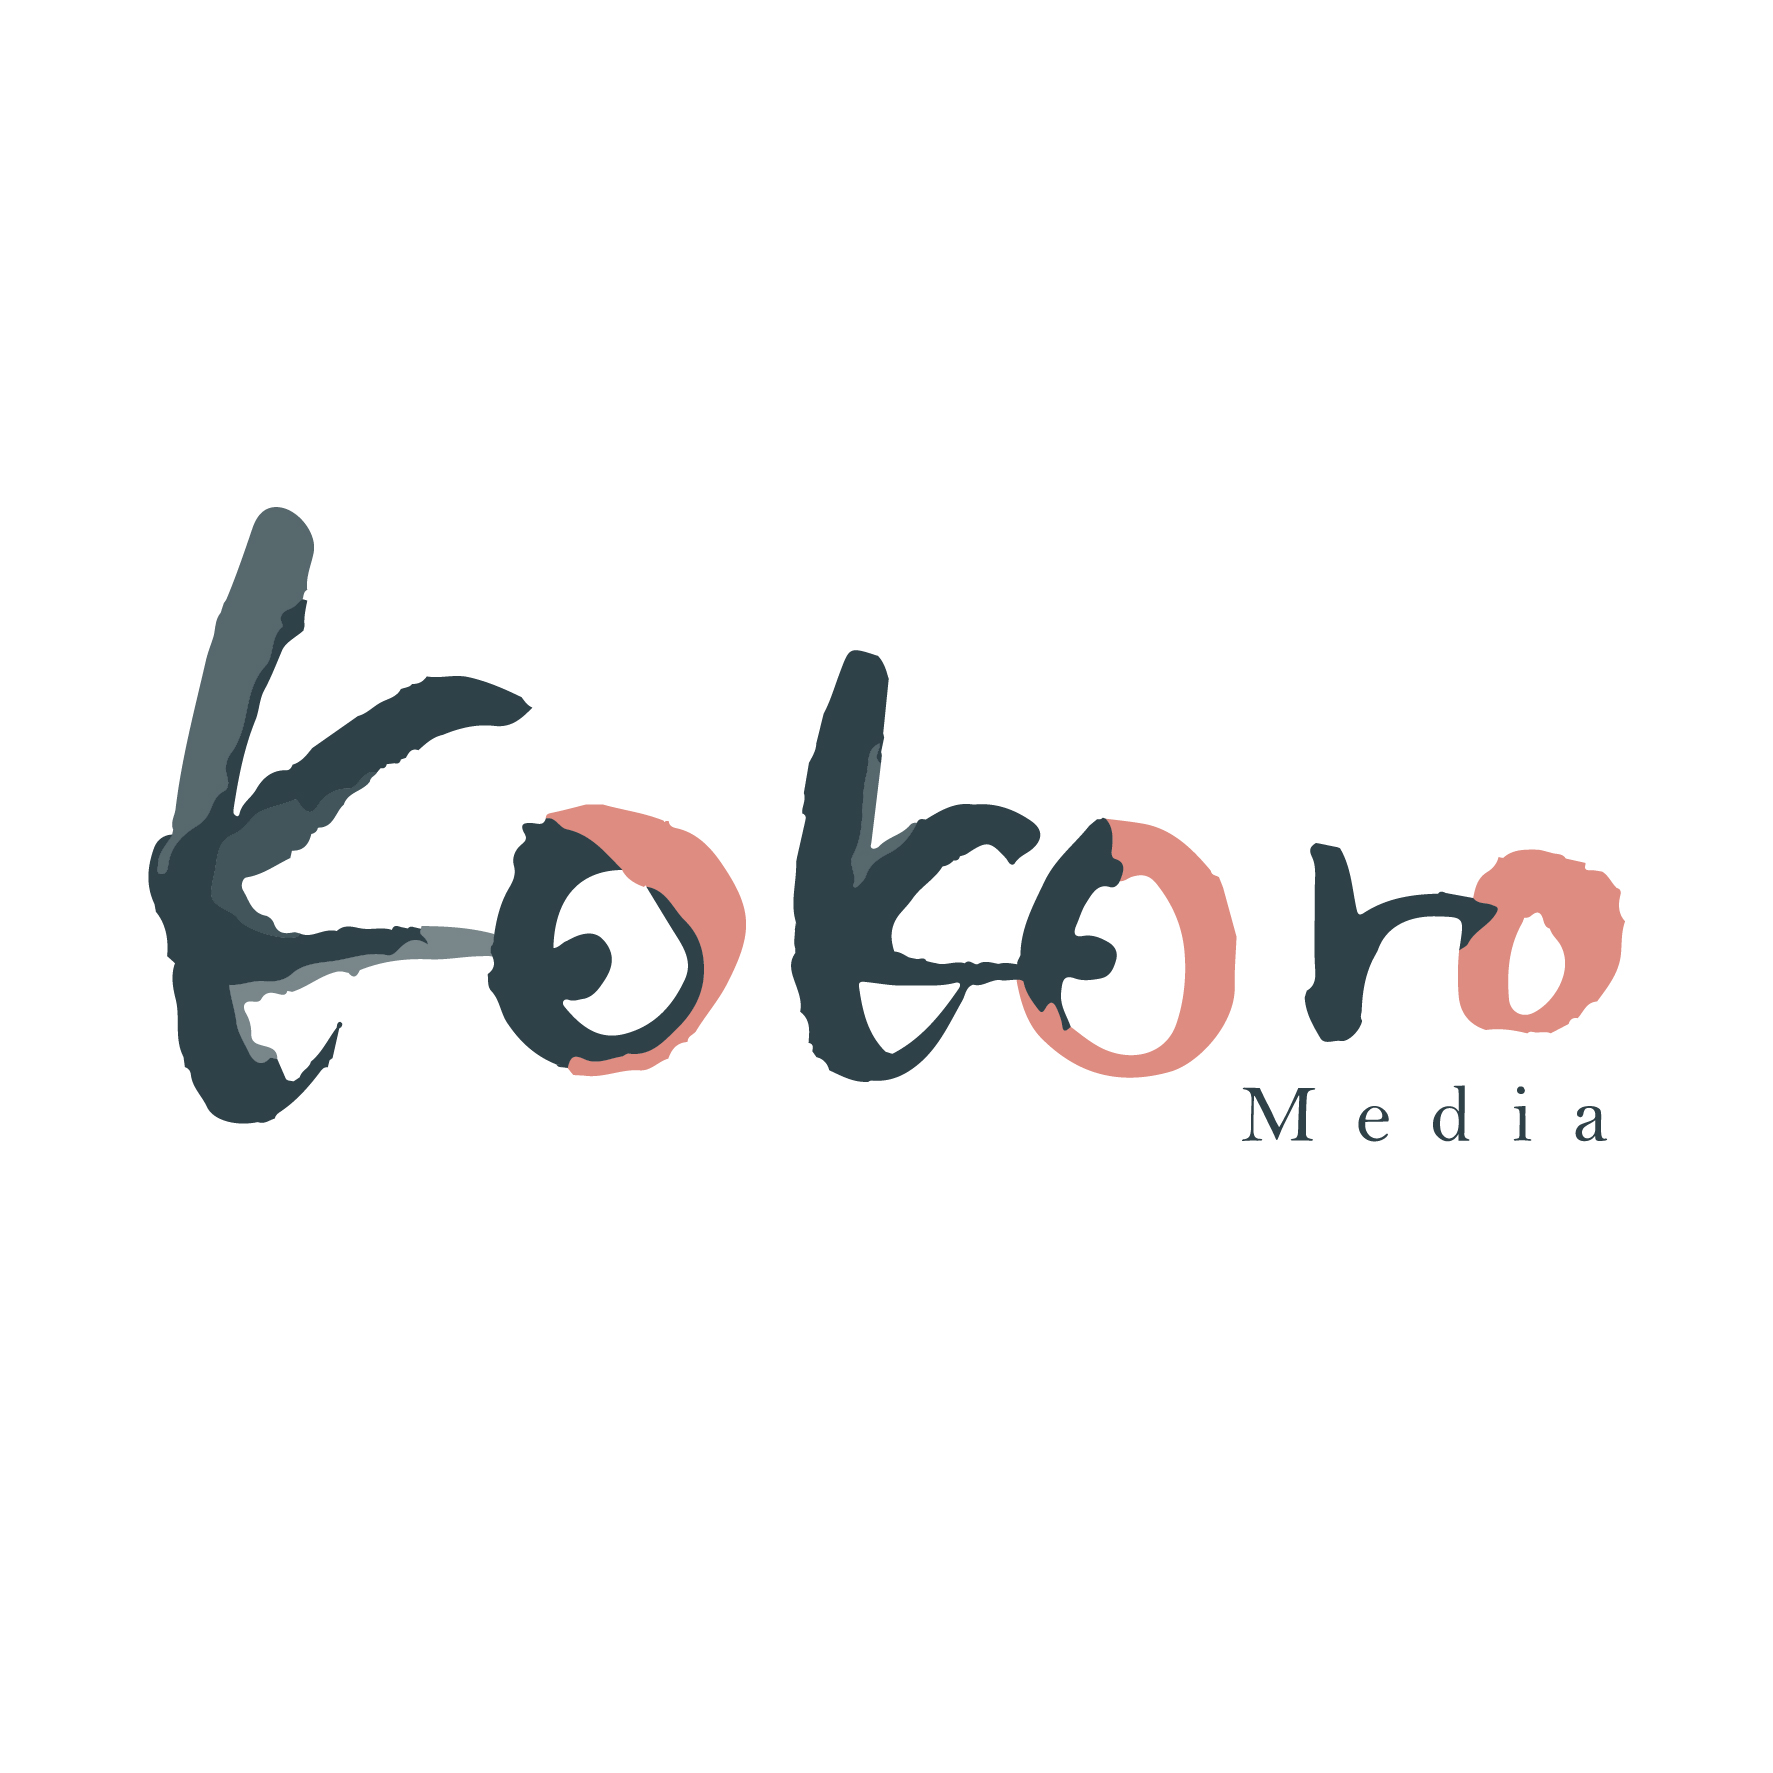 Kokoro Media – Japan viewed from the inside